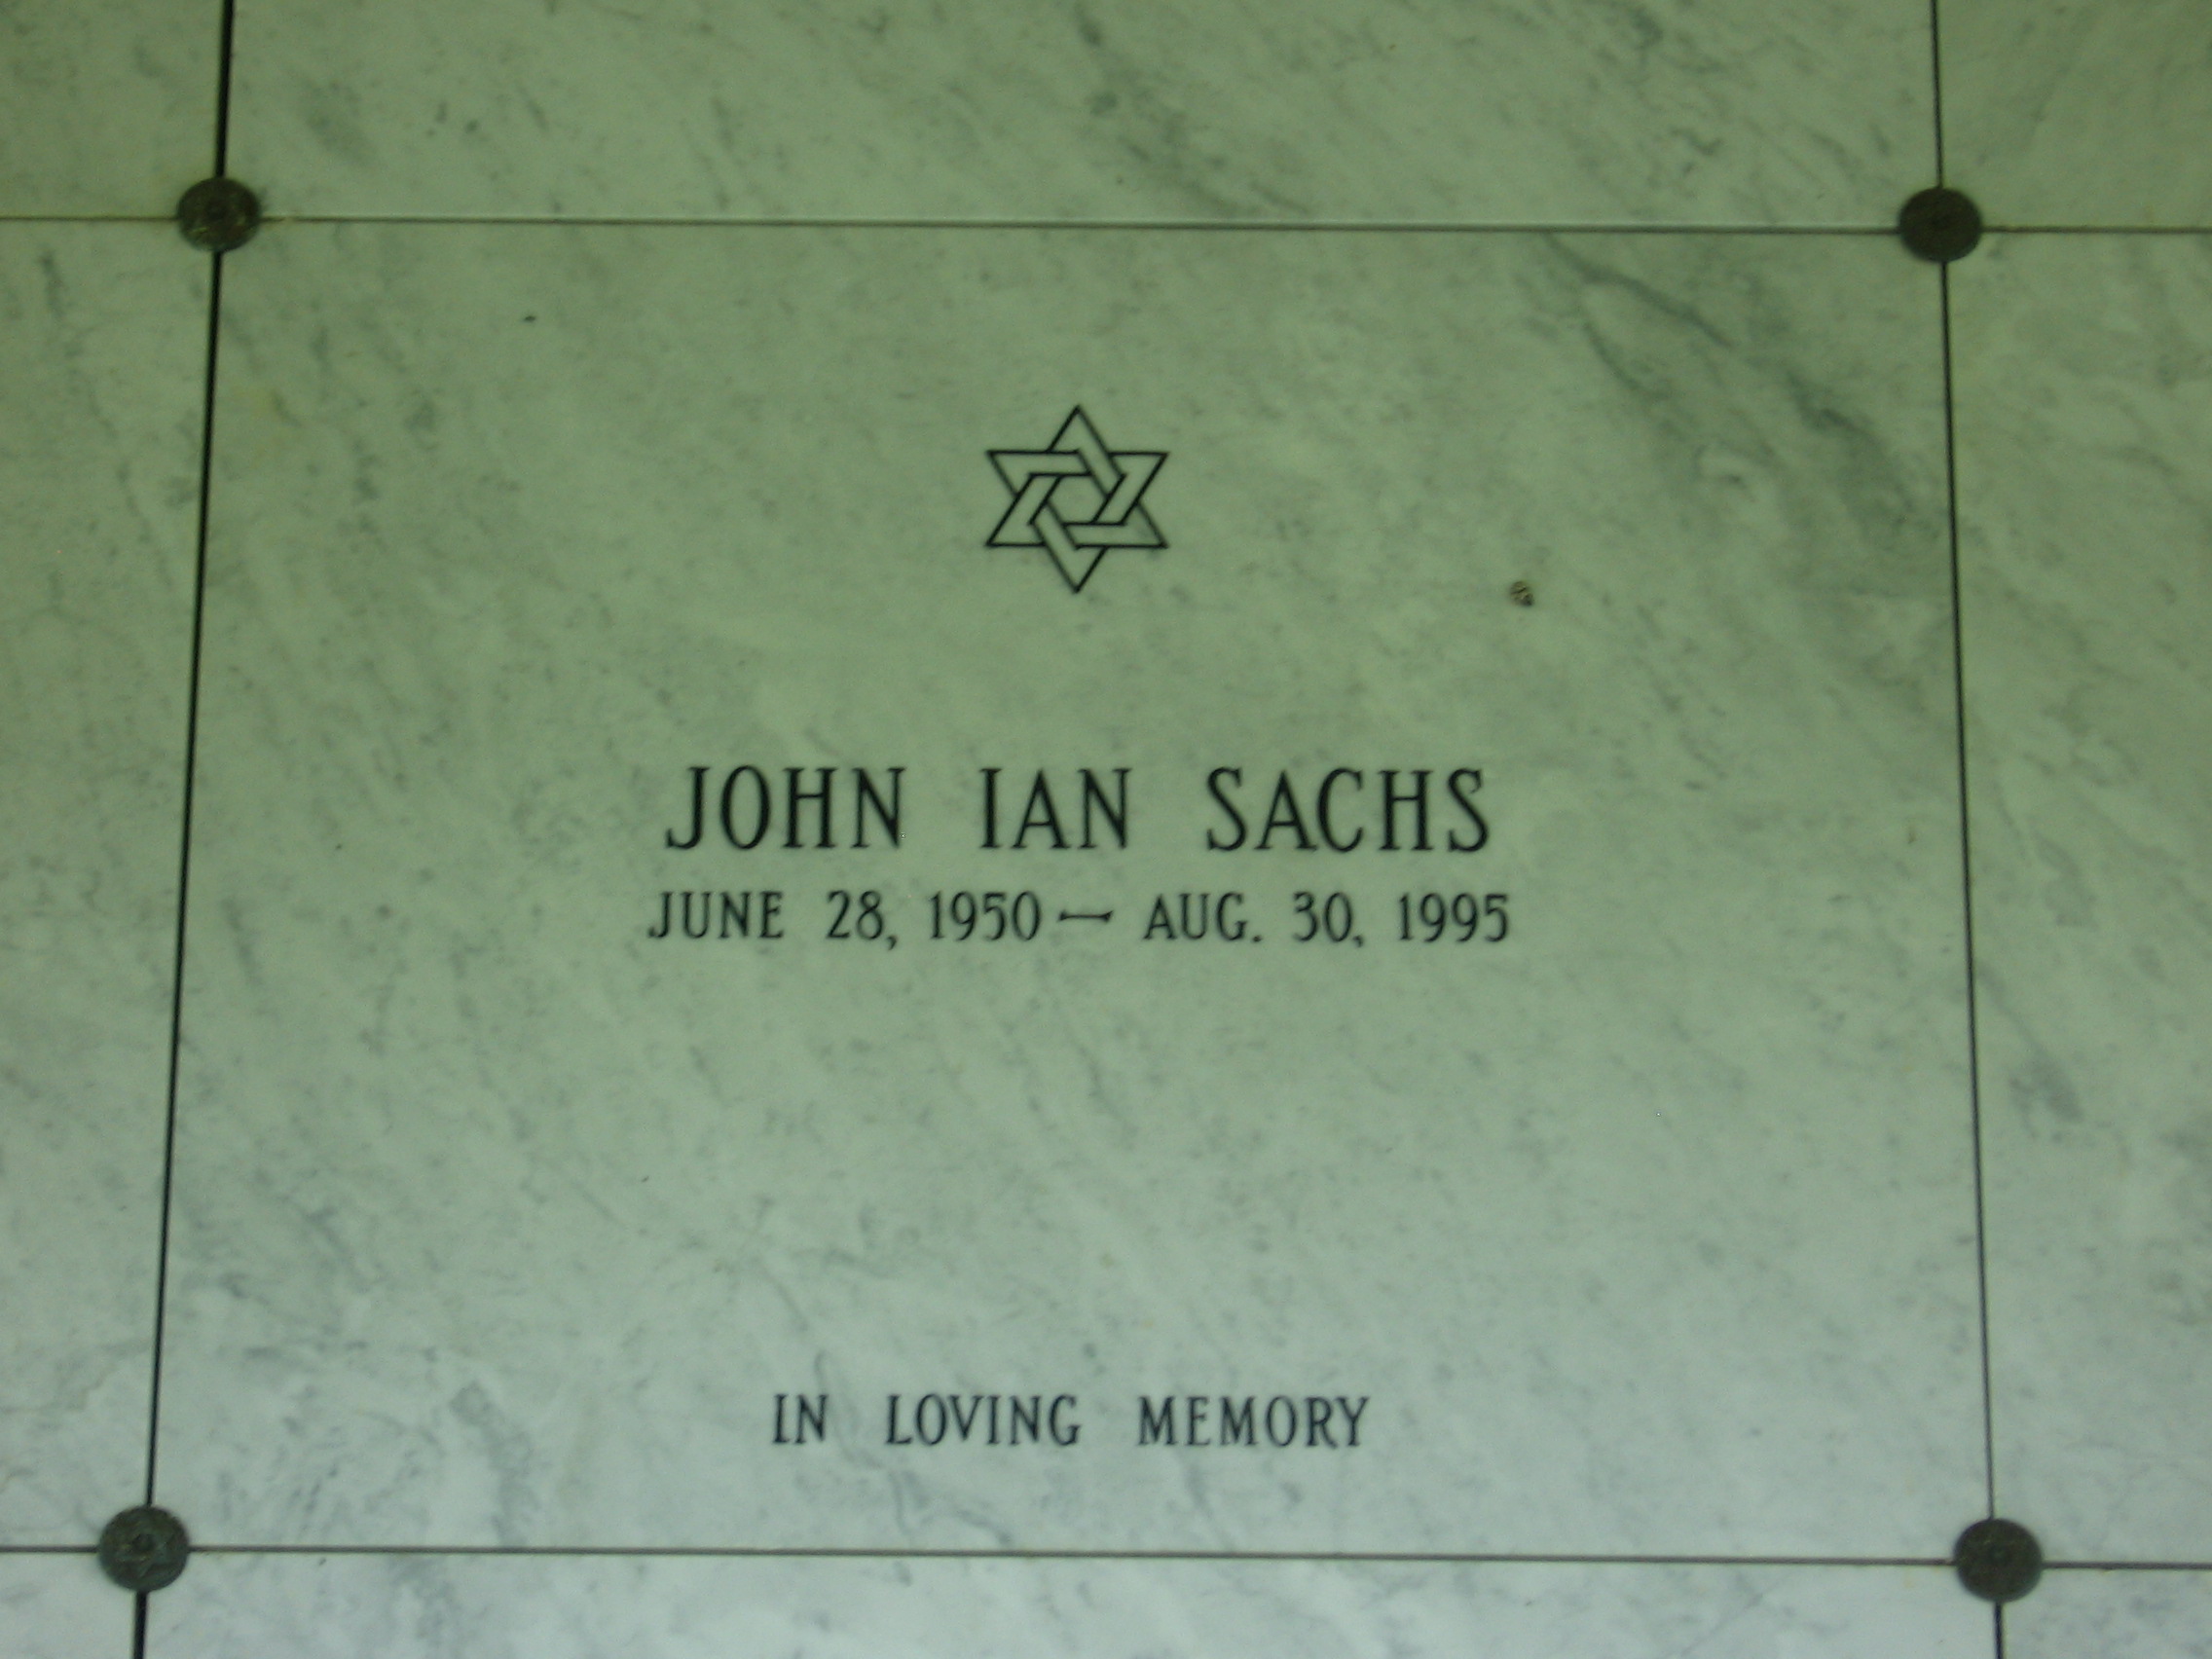 John Ian Sachs